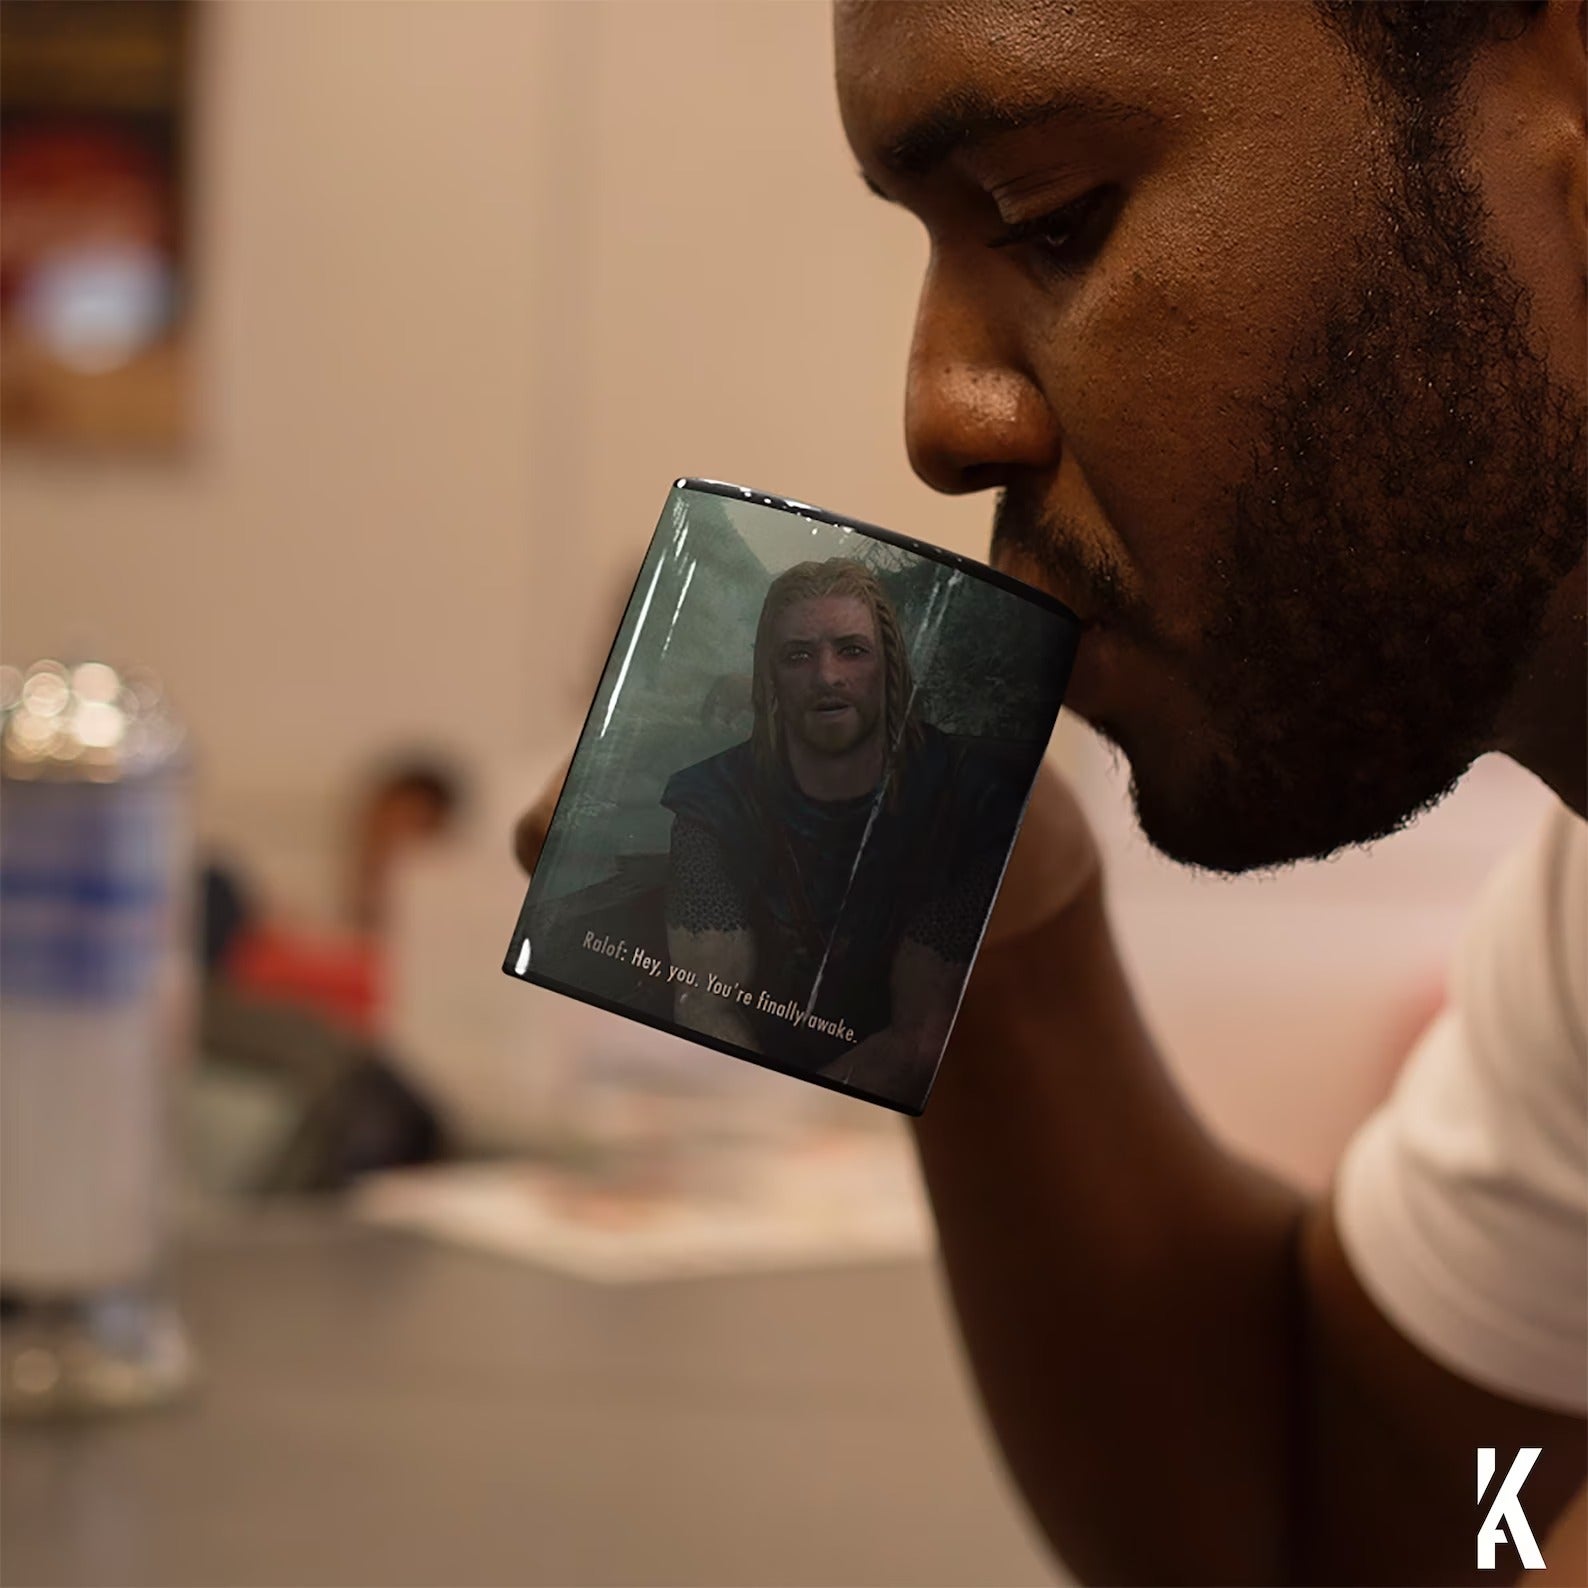 A guy drinking from Skyrim mug